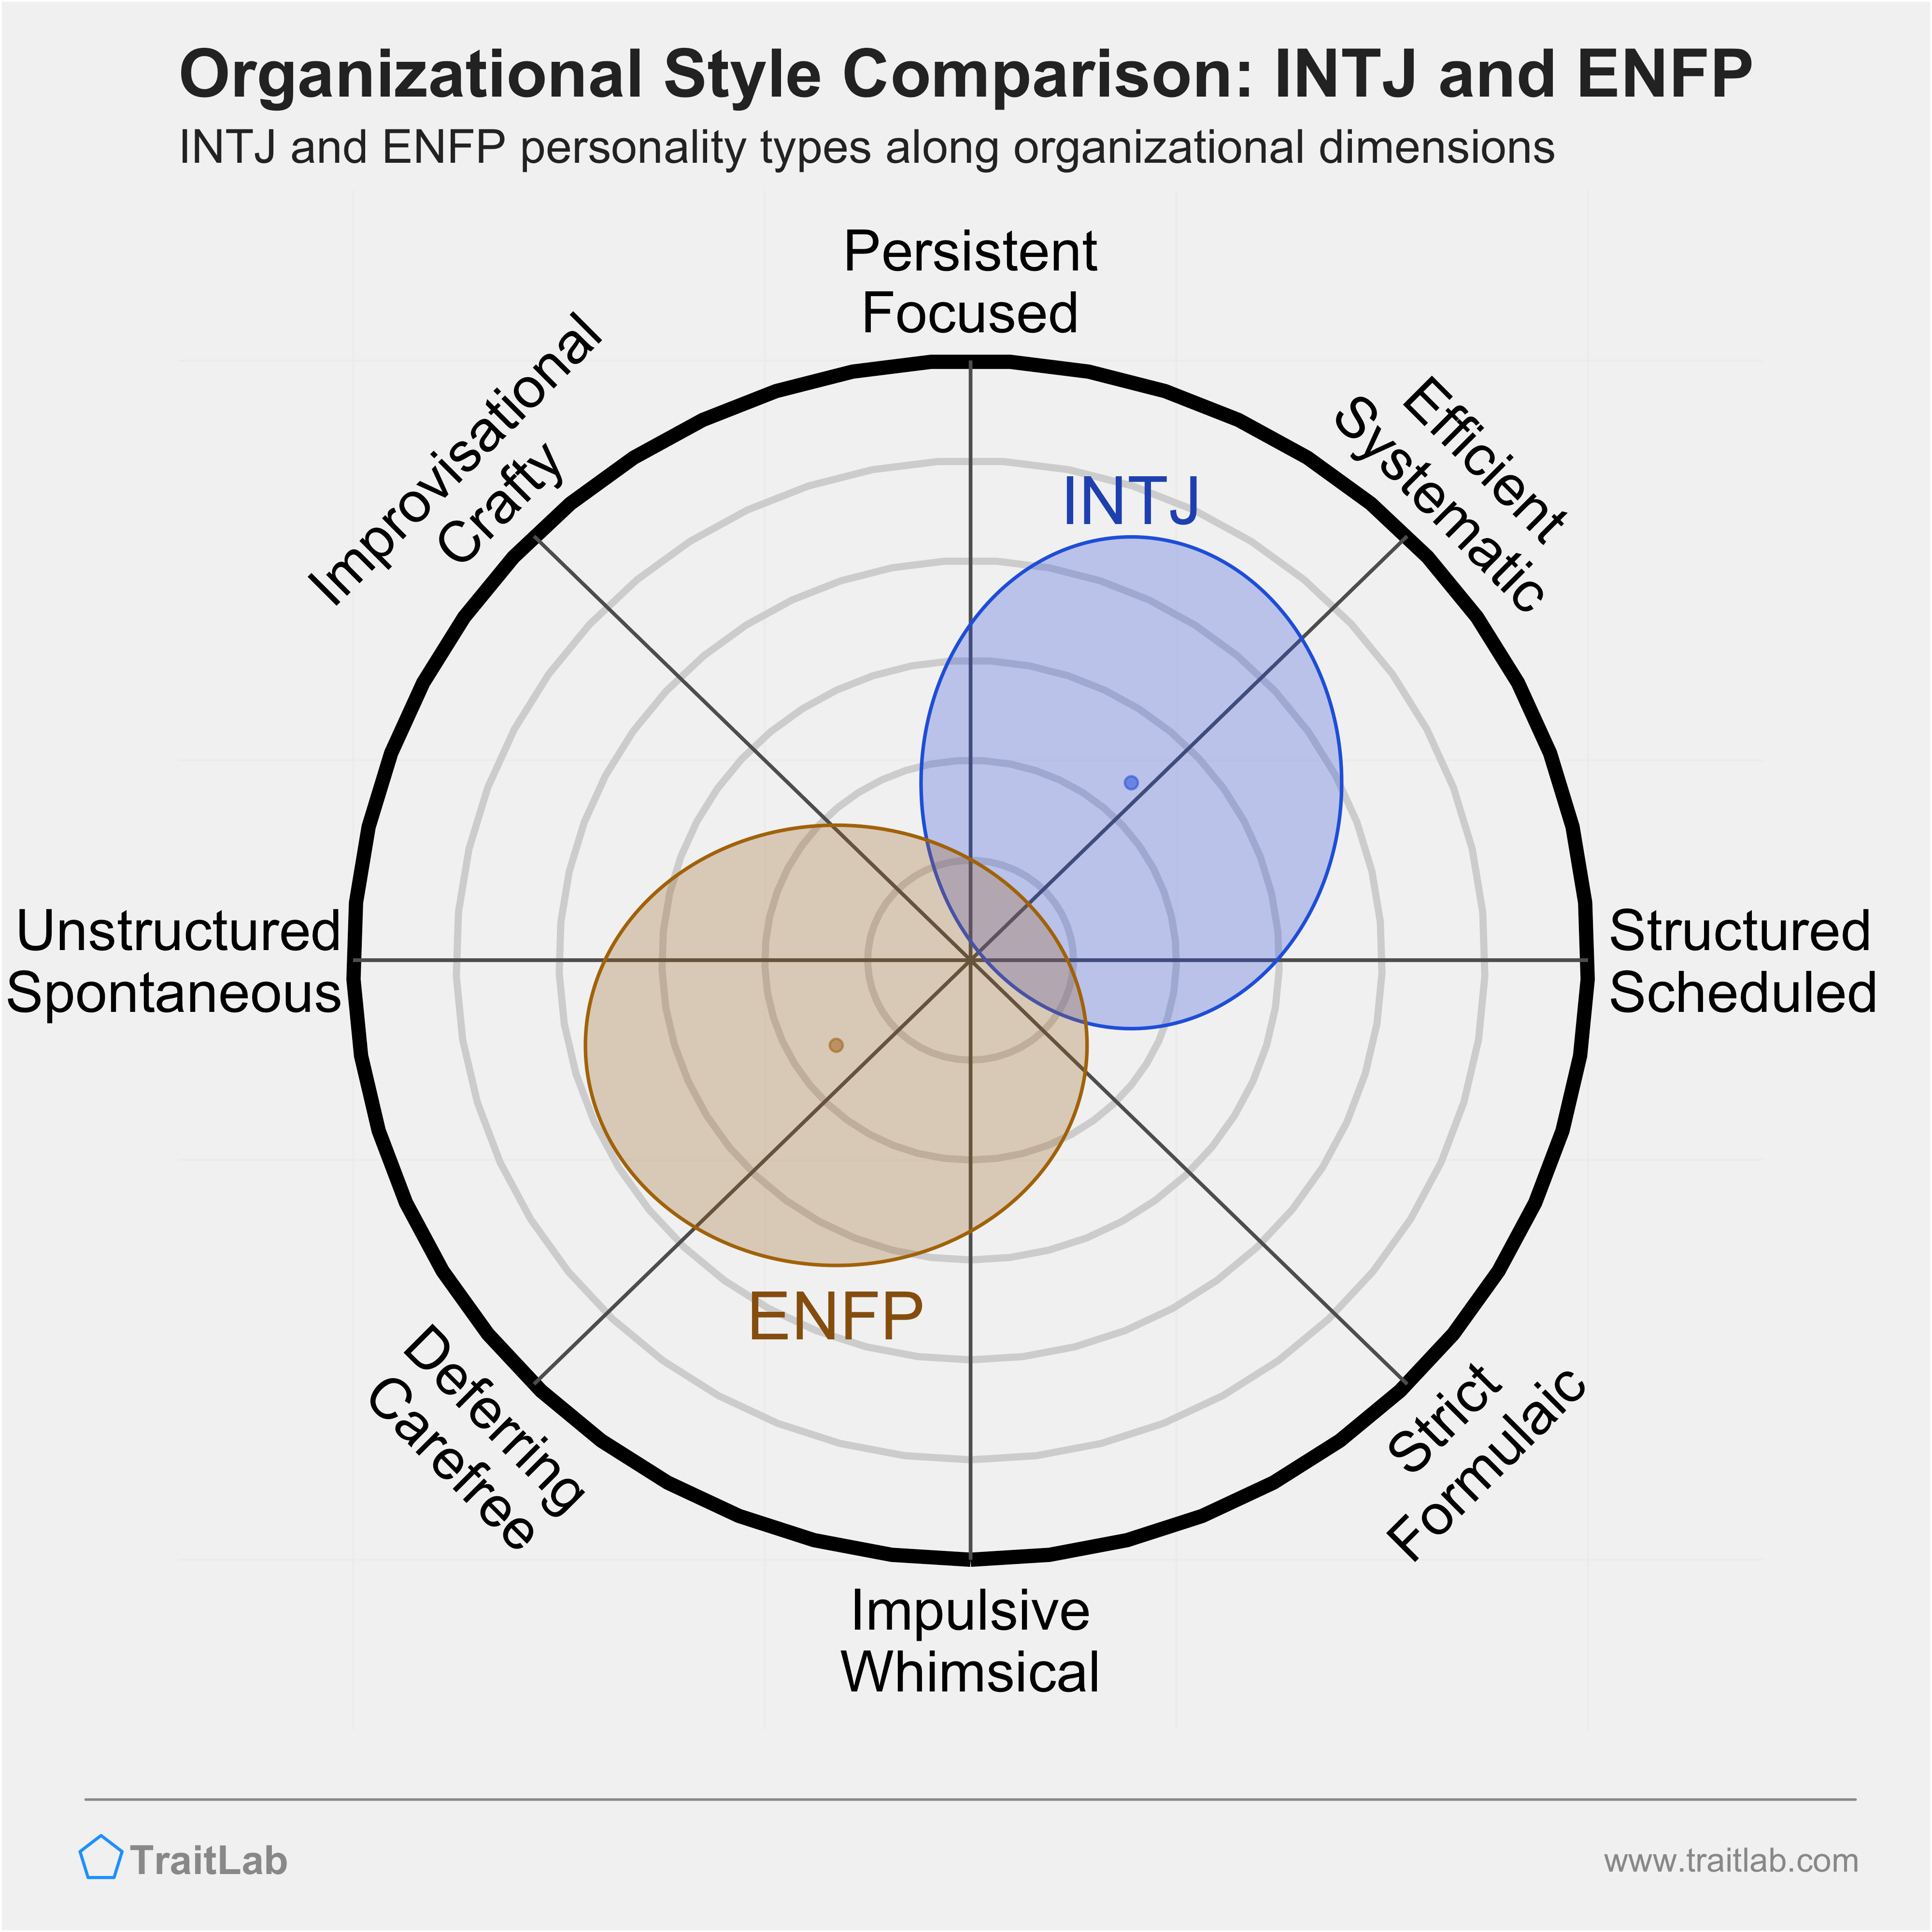 INTJ and ENFP comparison across organizational dimensions